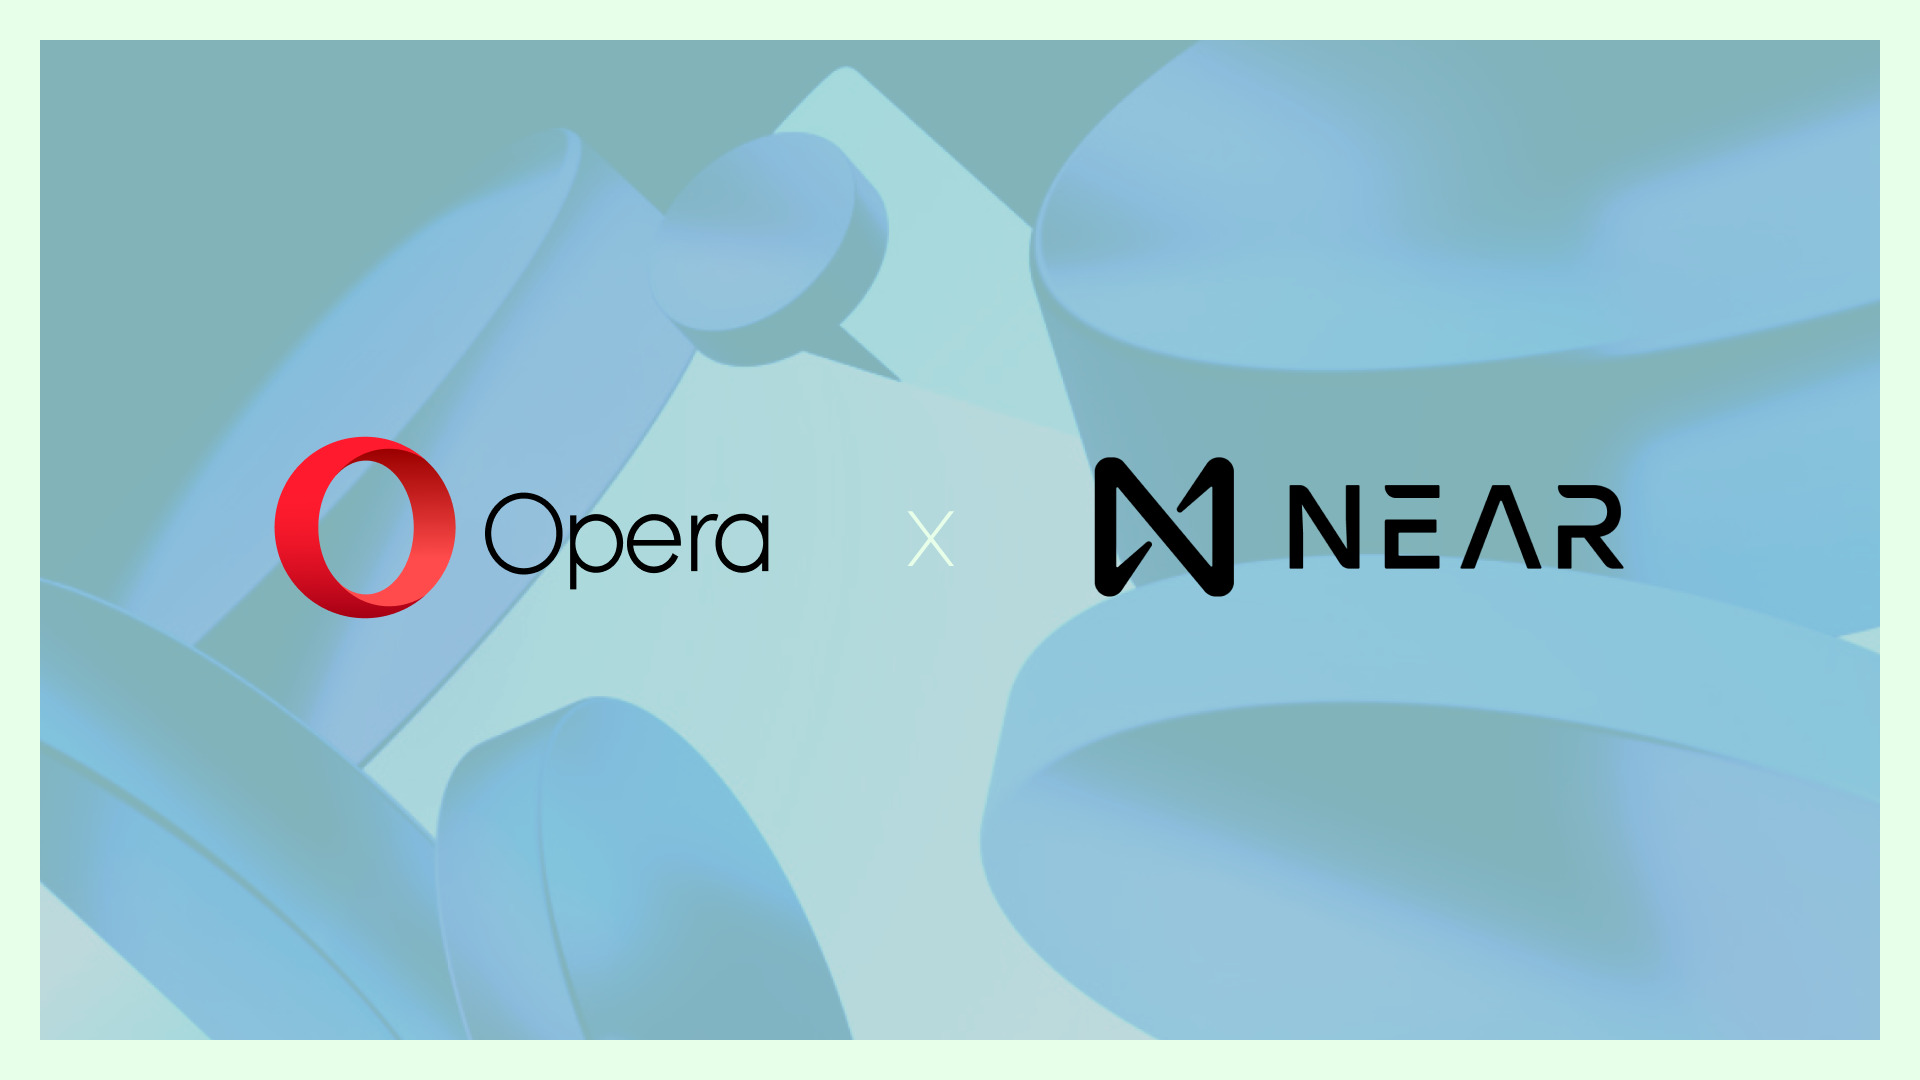 Opera to integrate NEAR protocol